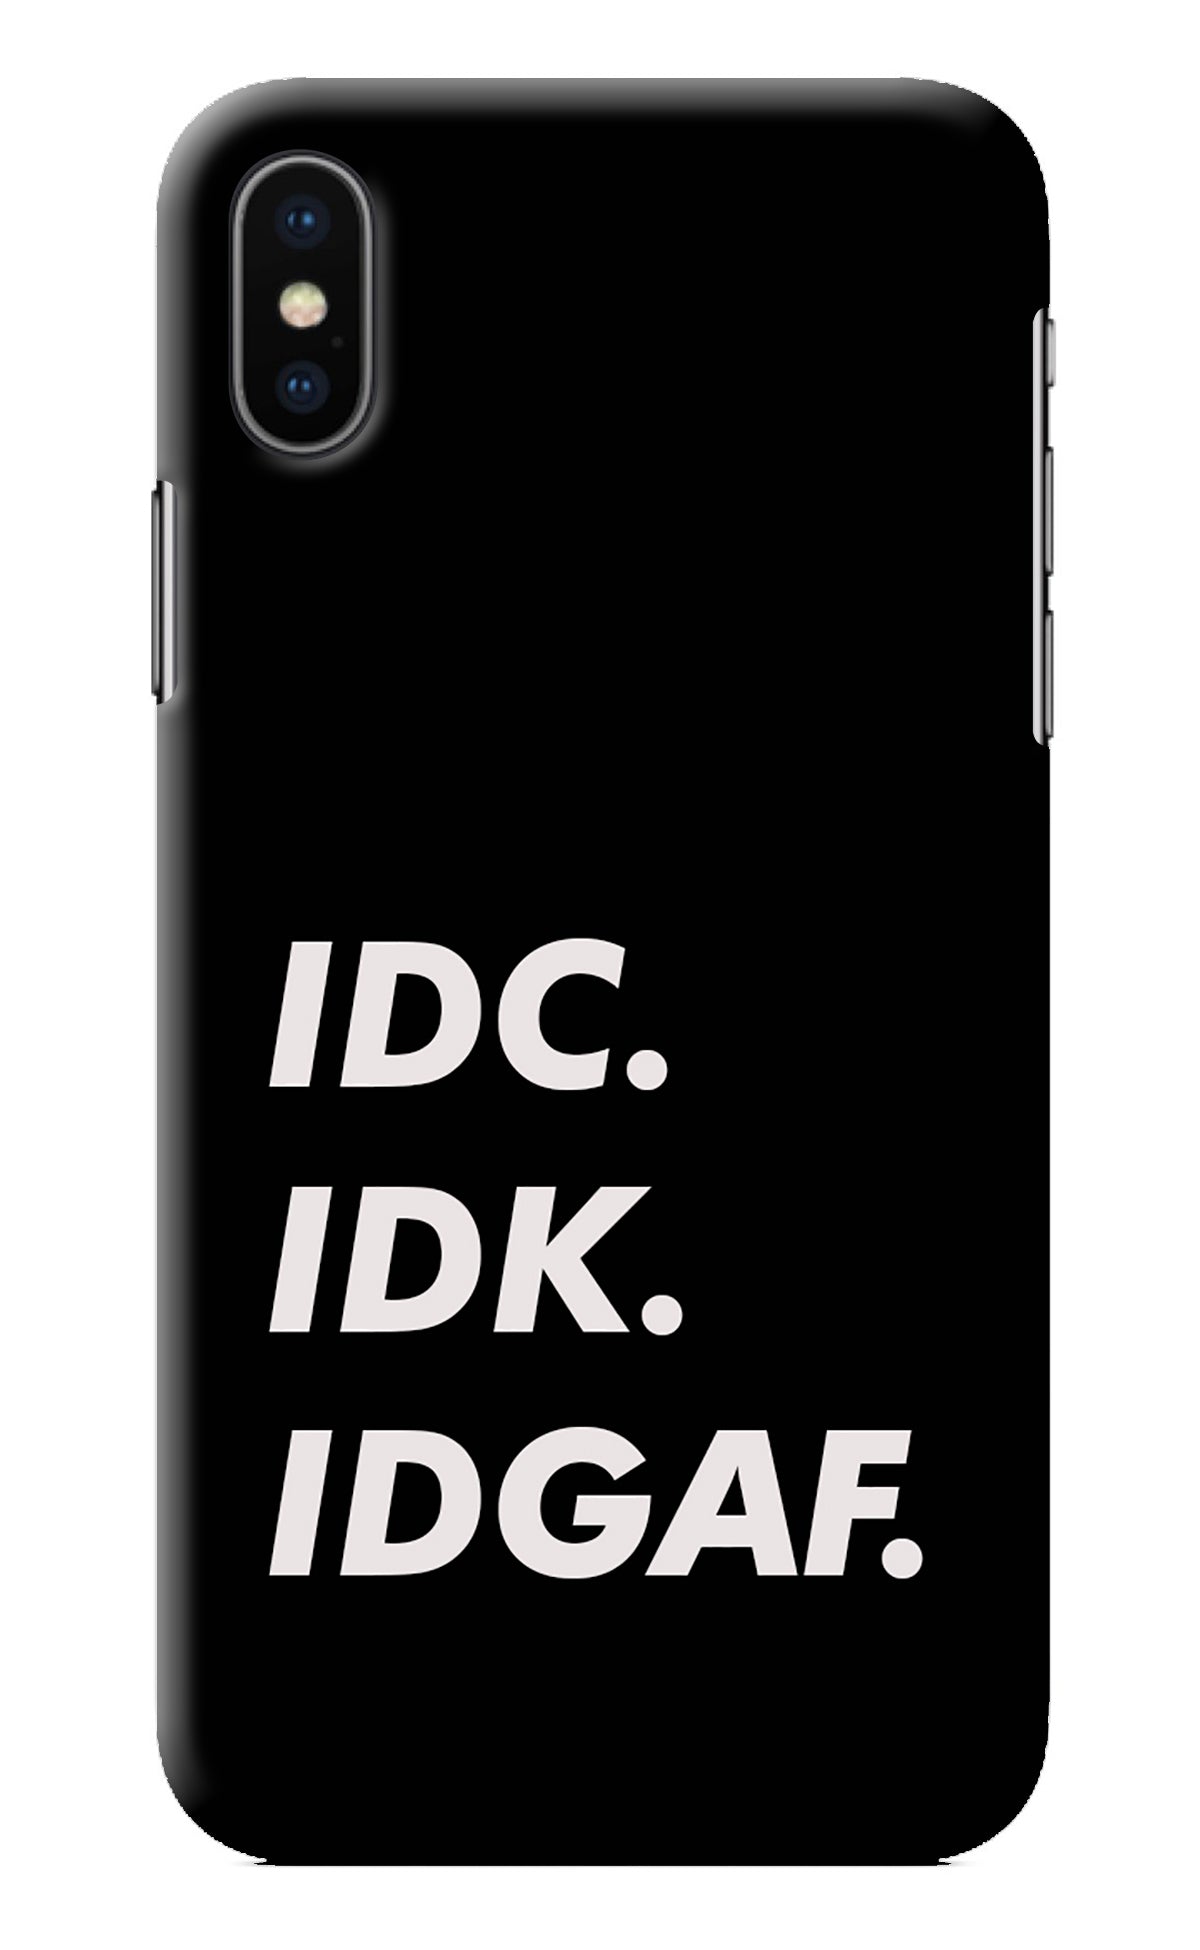 Idc Idk Idgaf iPhone XS Back Cover